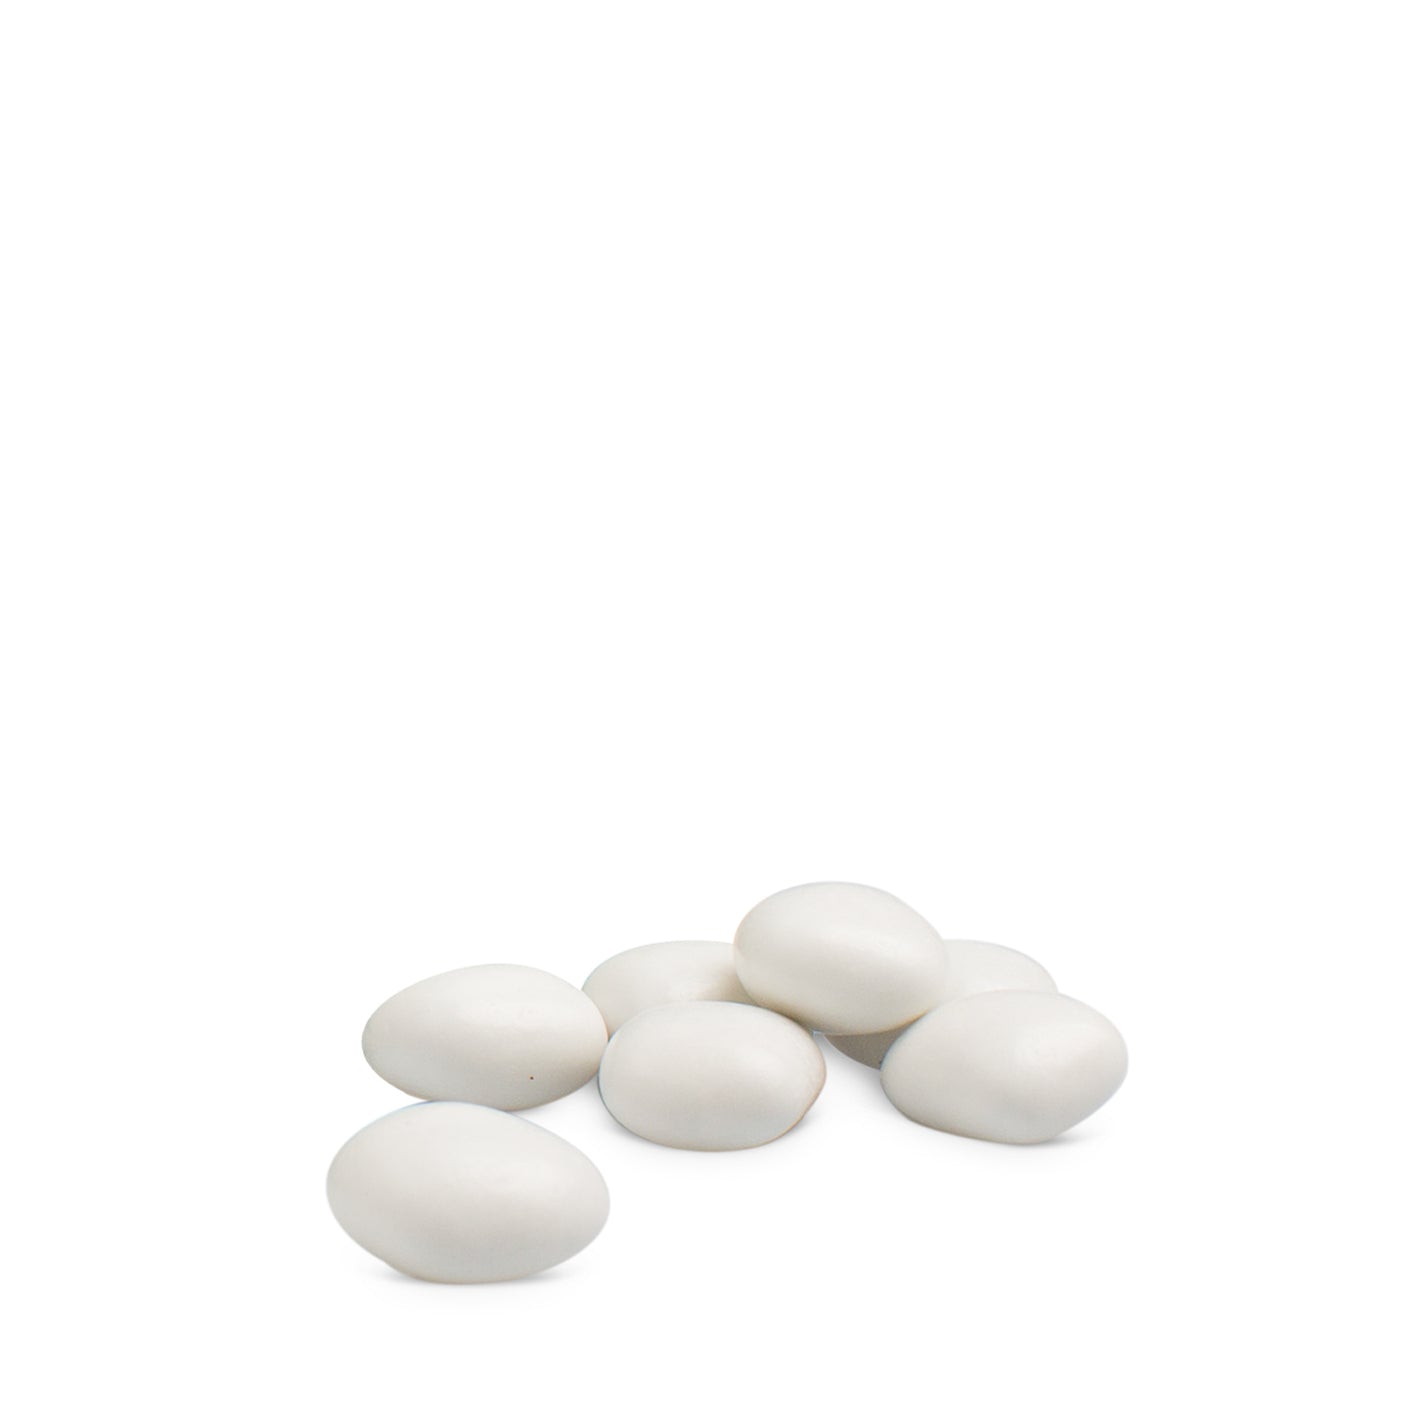 Amarelli Bianconeri Mint Licorice - White Box